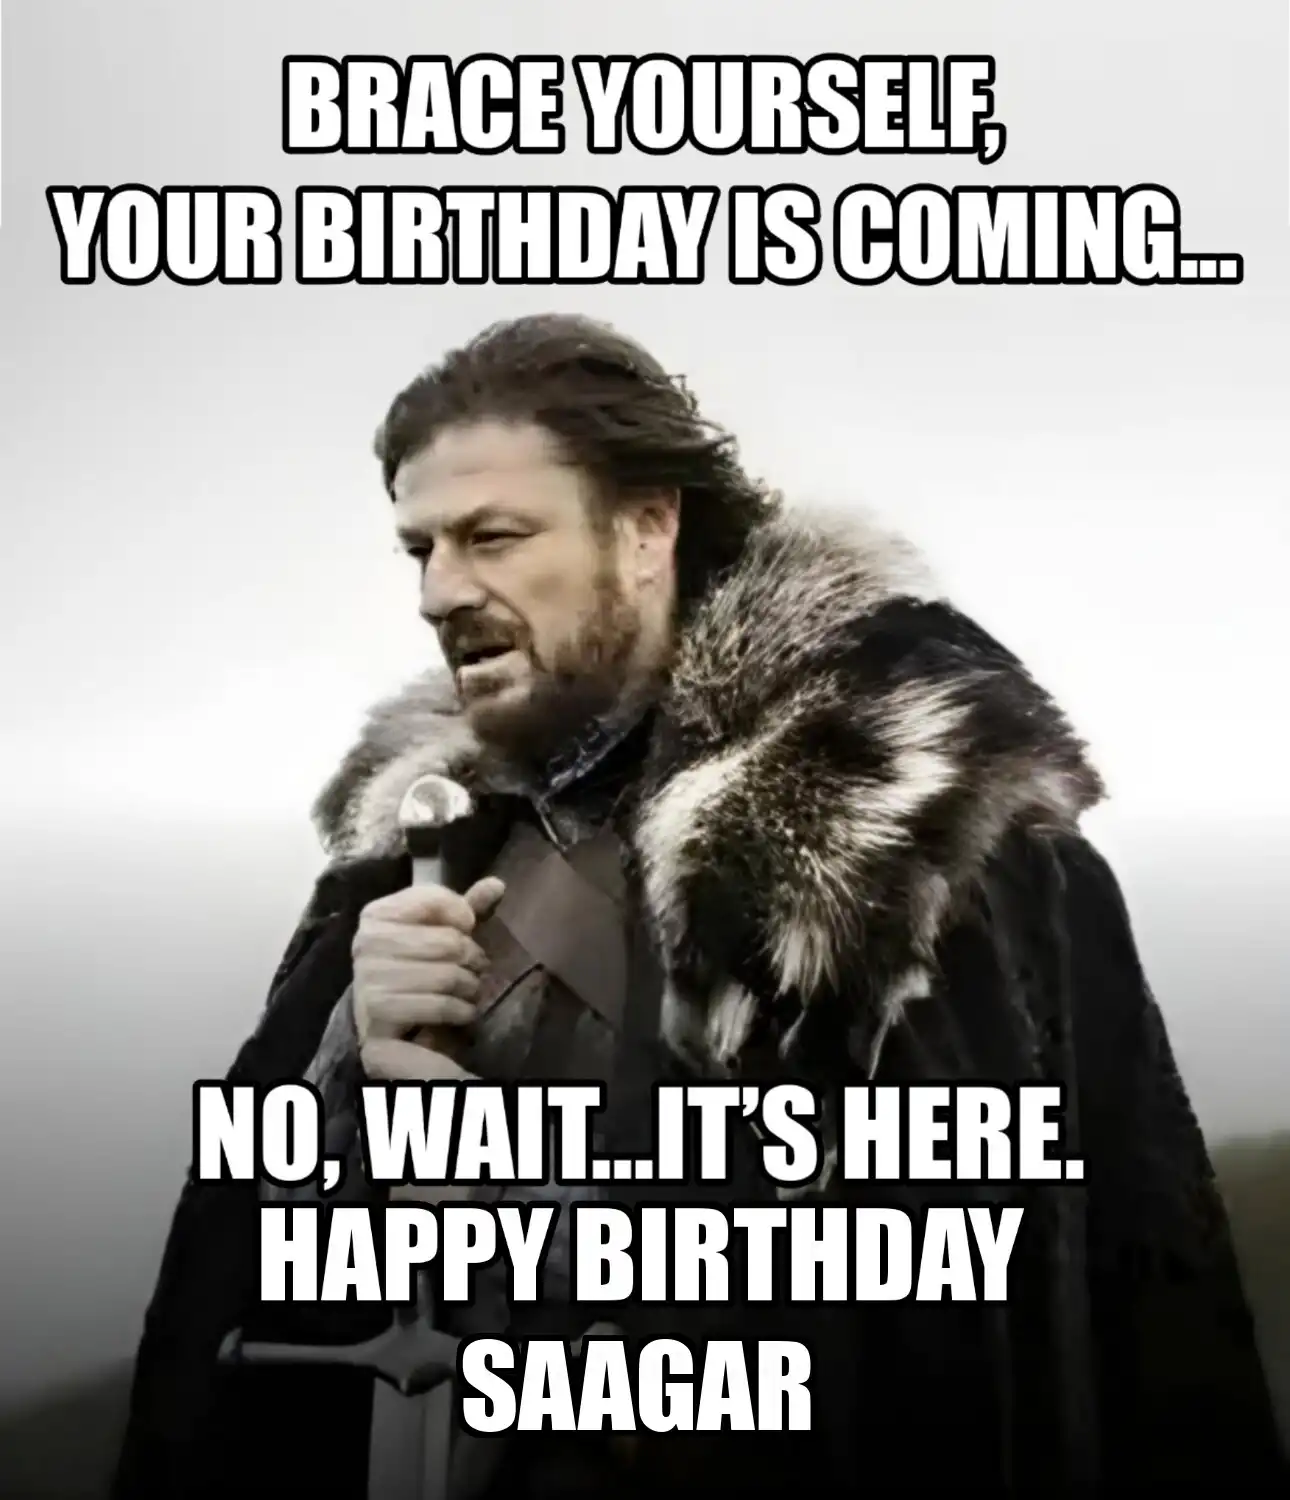 Happy Birthday Saagar Brace Yourself Your Birthday Is Coming Meme